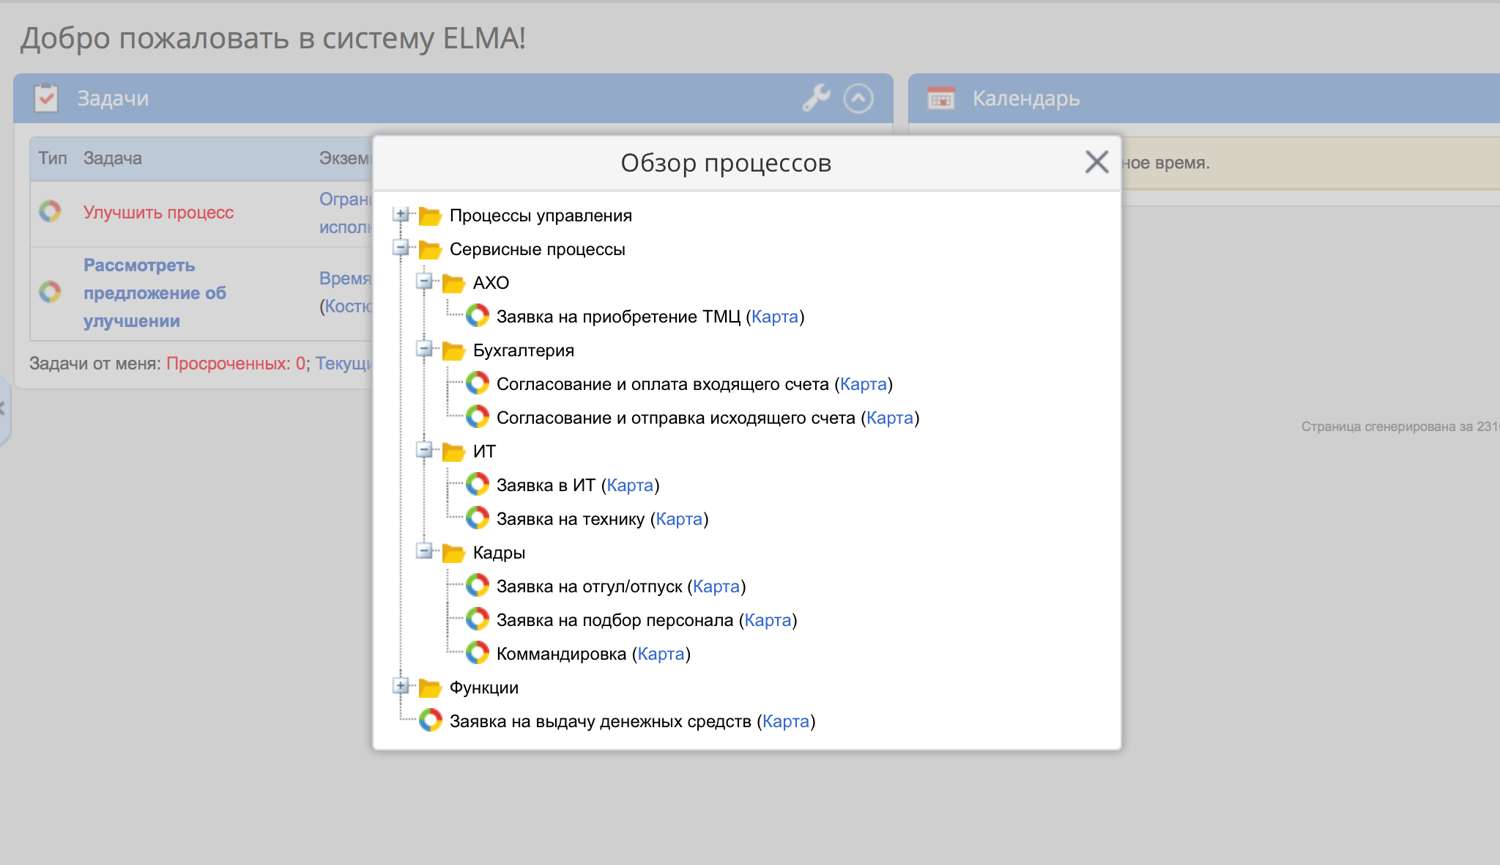 Пример каталога сервисов поддержки в BPM-системе ELMA